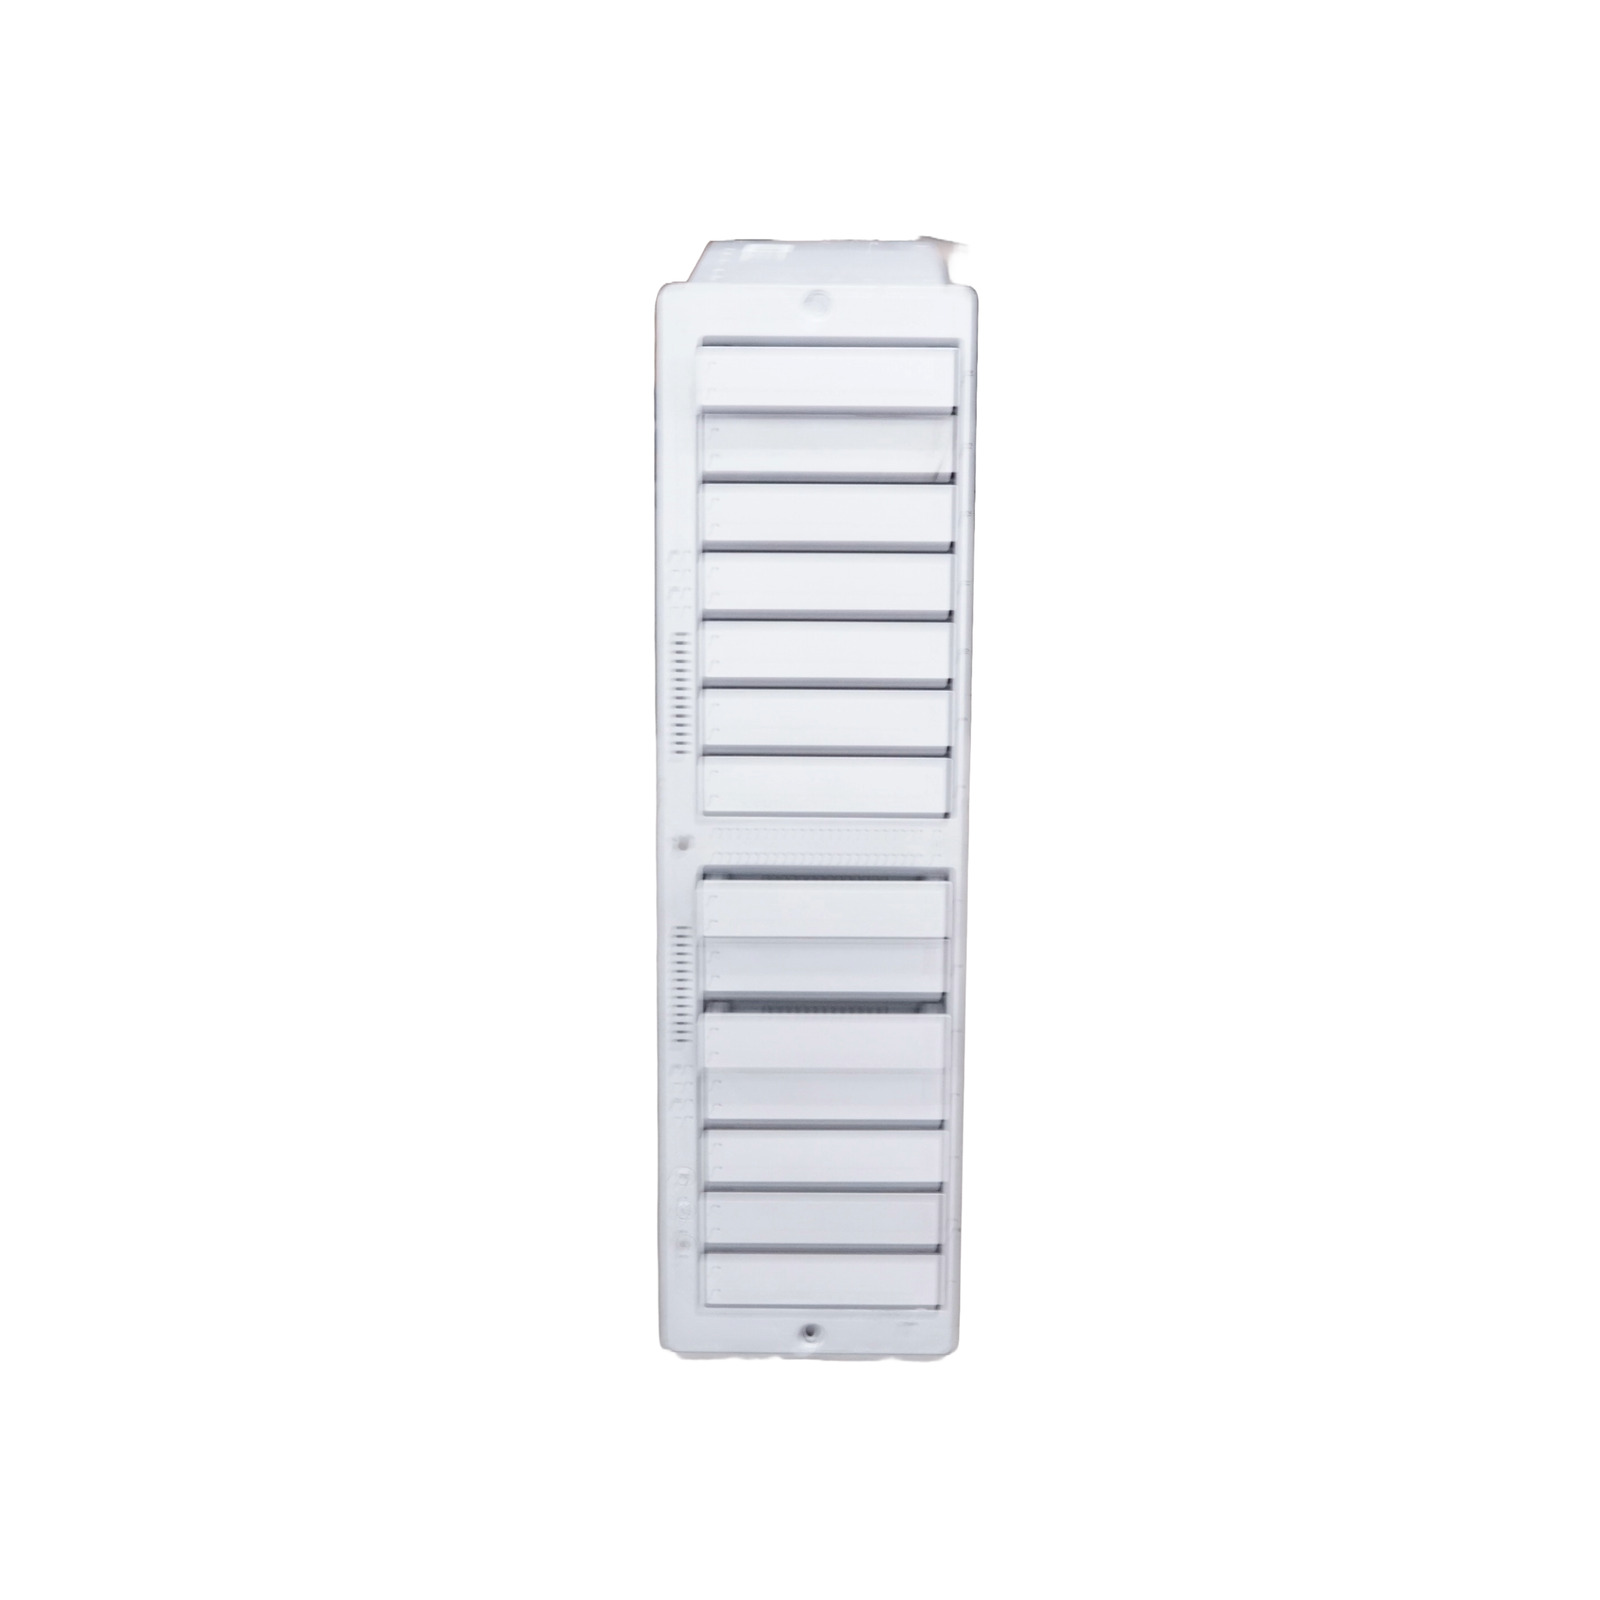 Apple Xserve A1009 14-Bay RAID Network Storage Array Enclosure